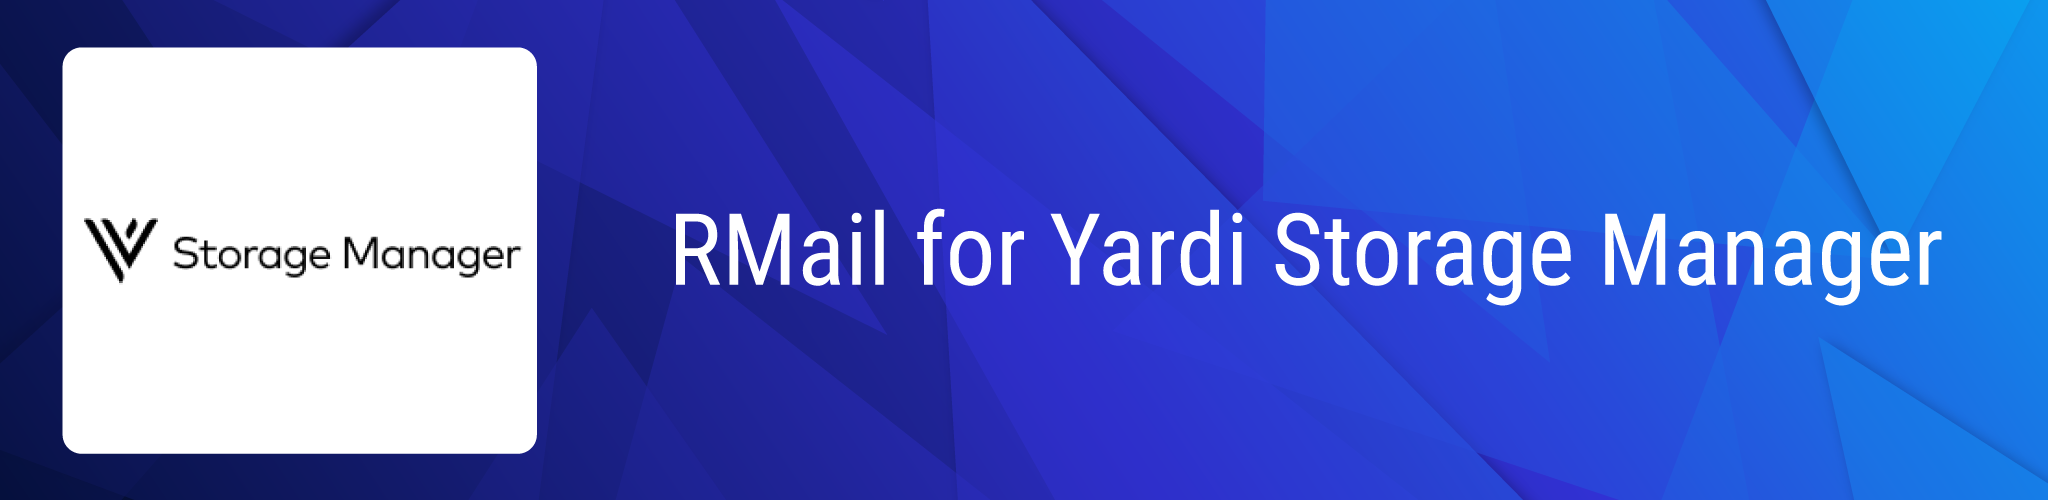 RMail for Yardi Storage Manager